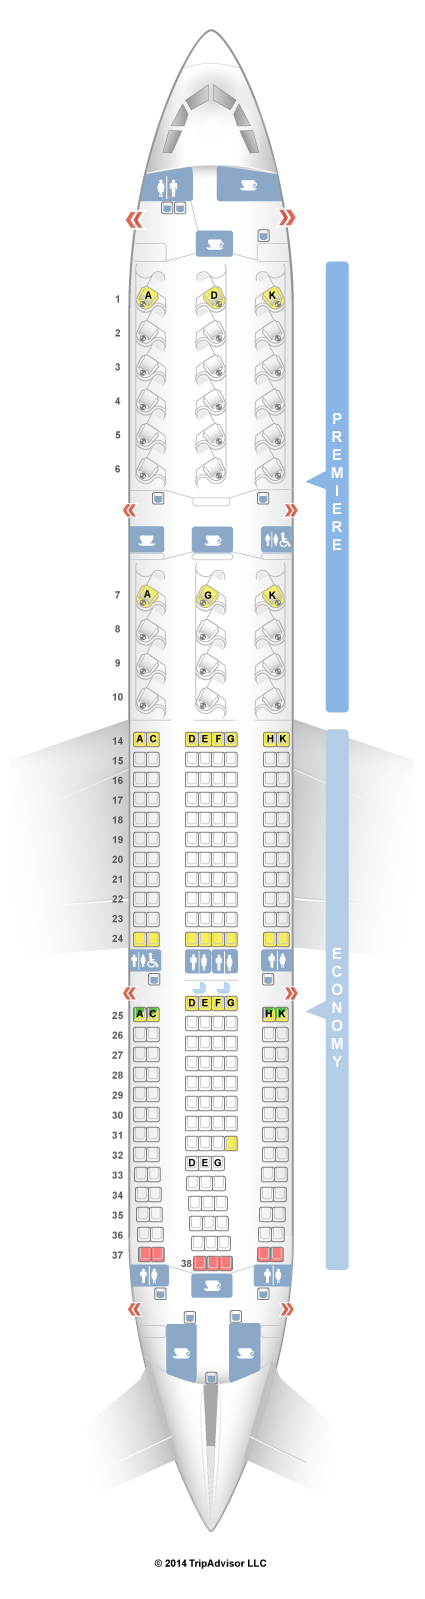 Jet Airways Flight Seating Chart